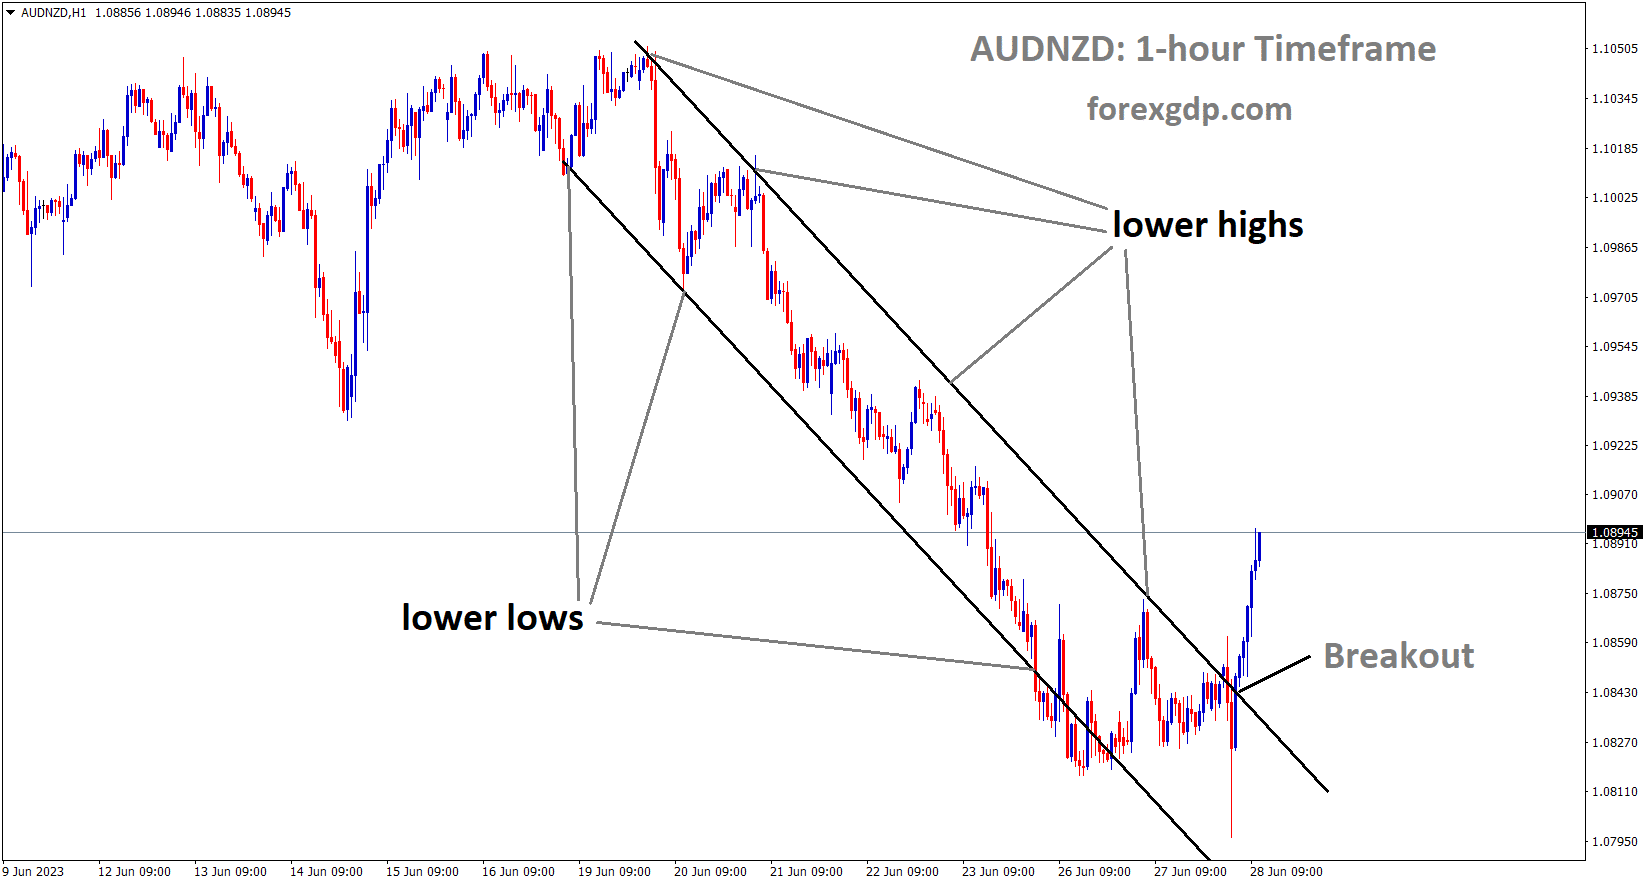 AUDNZD has broken the Descending channel in upside.